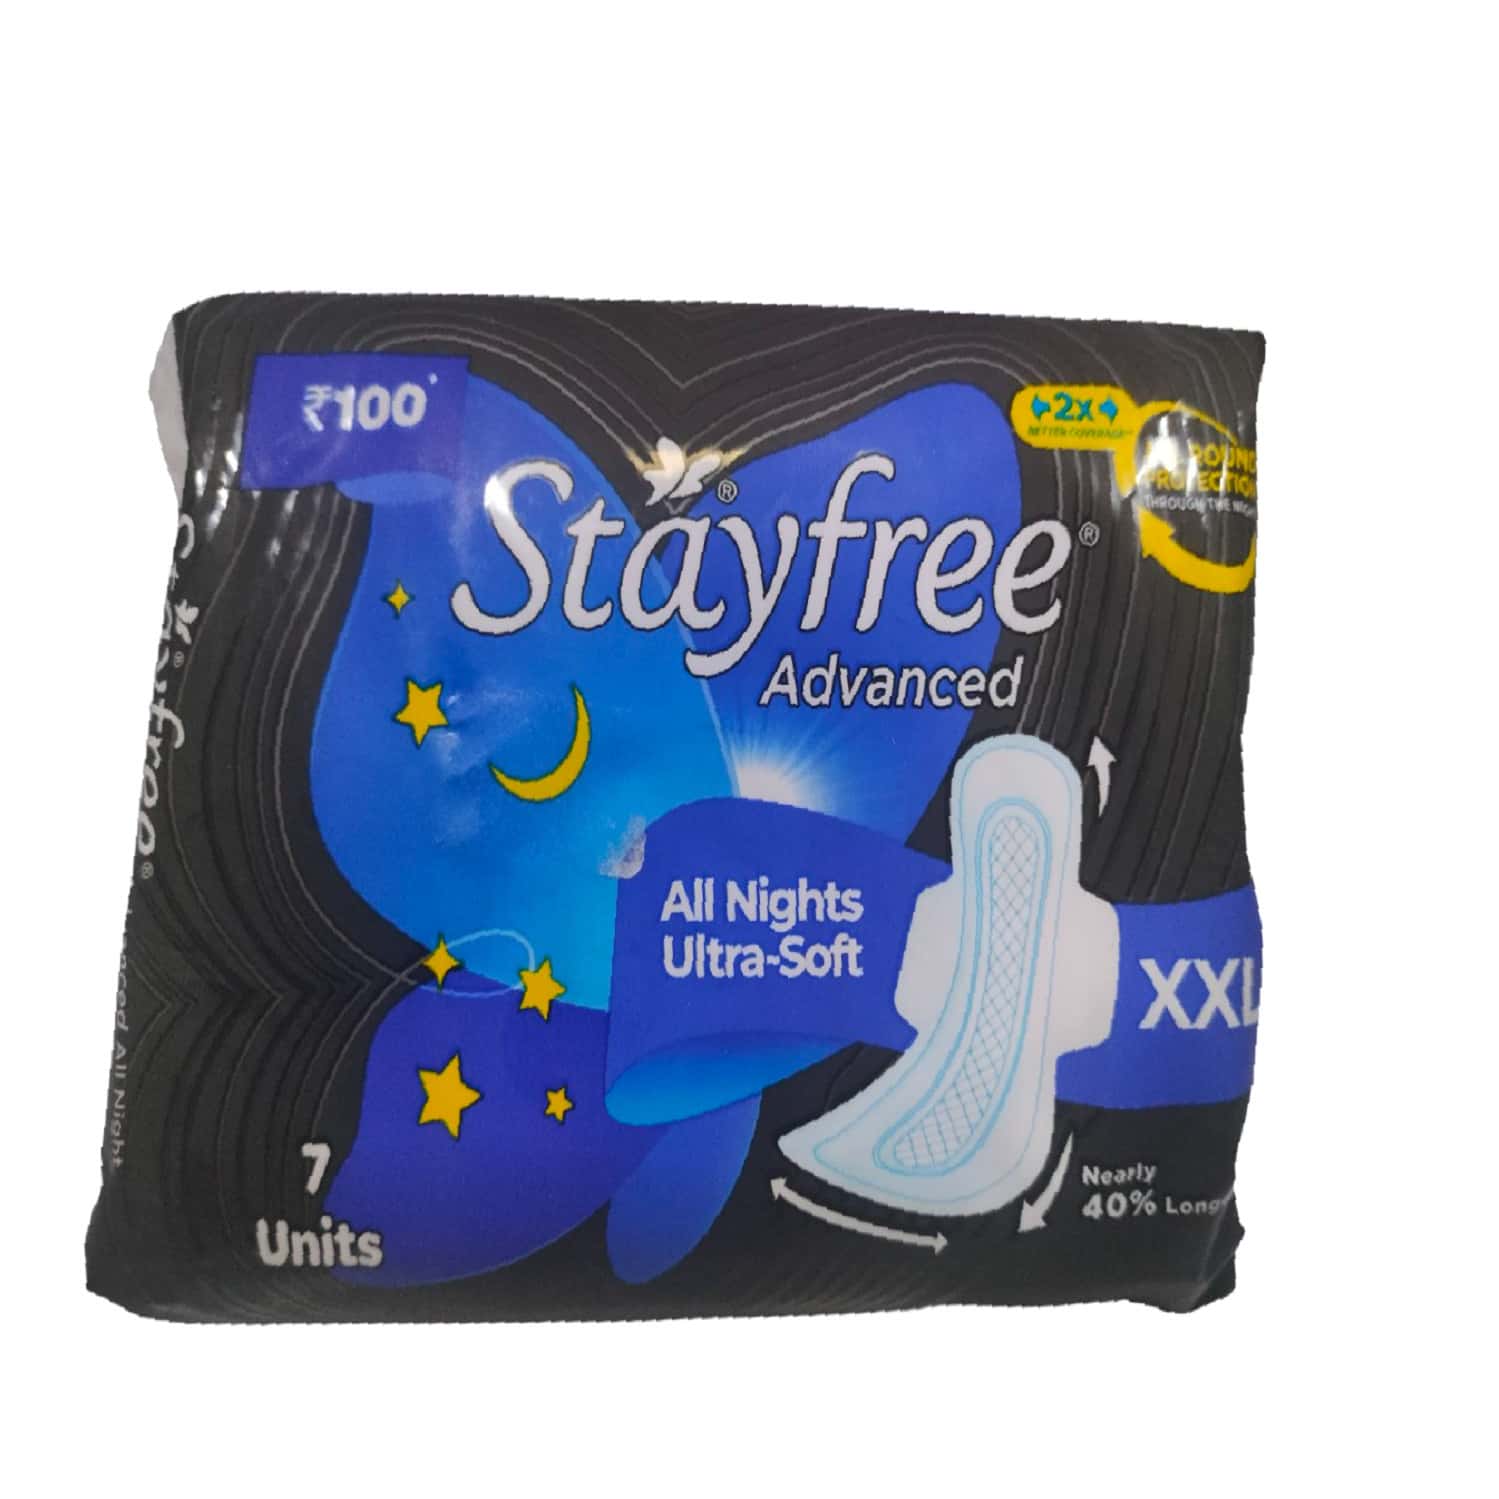 Stayfree Advanced All Nights Ultra Soft Xxl 7 Sanitary Pads